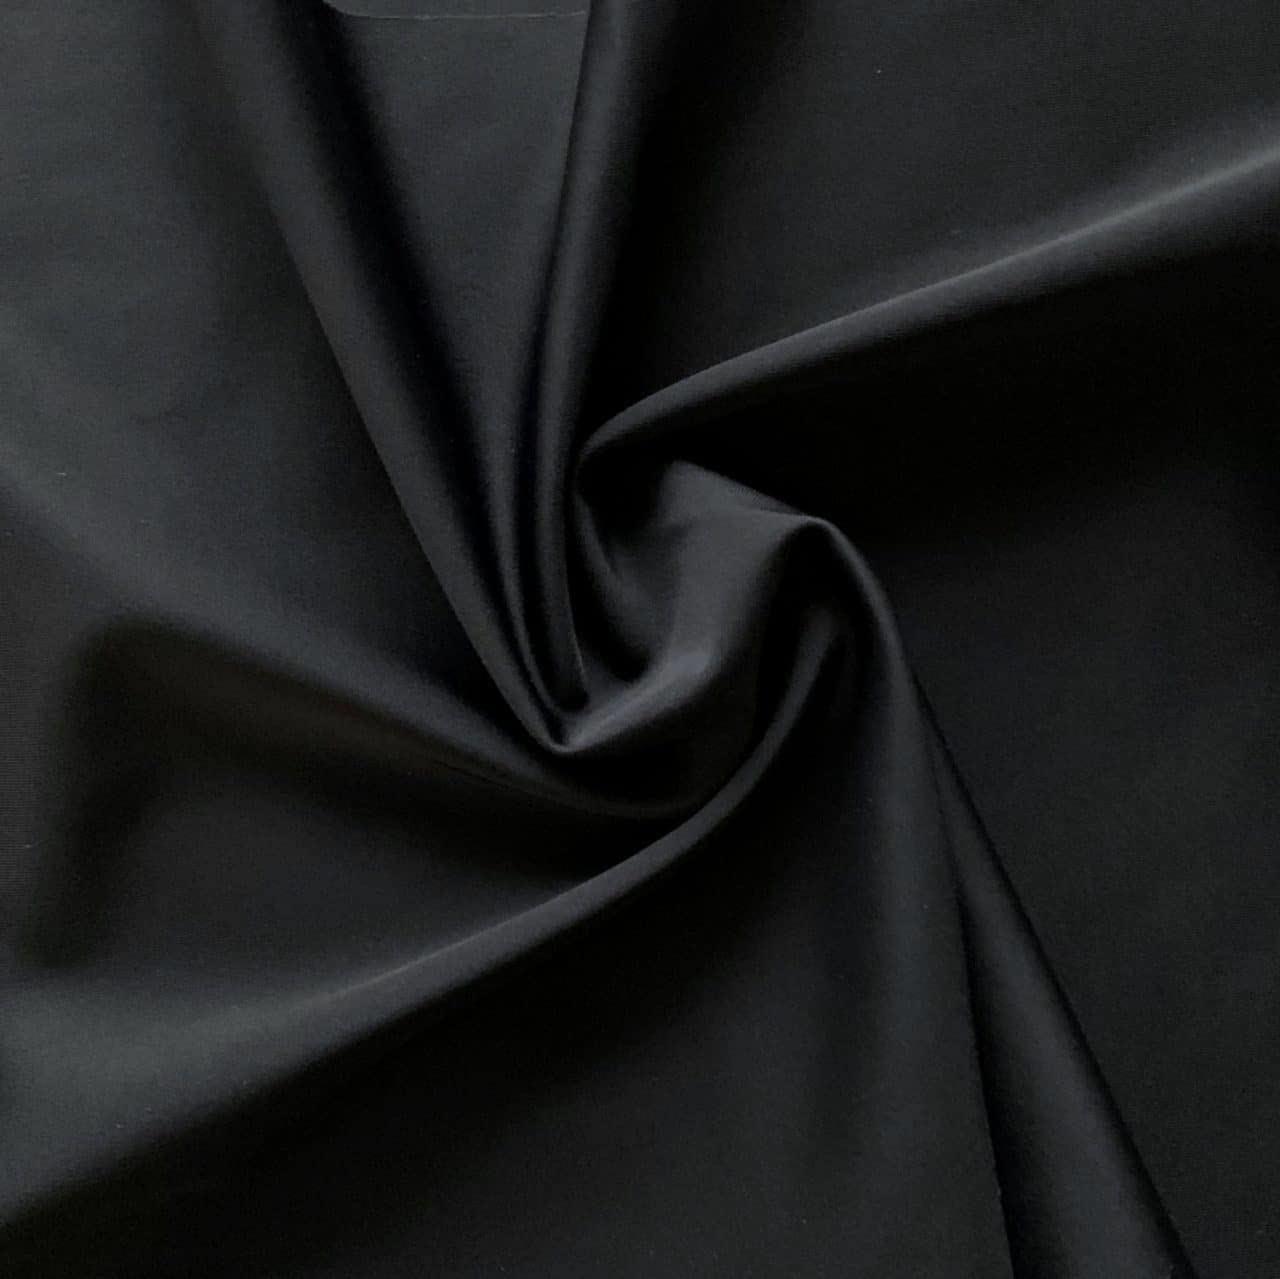  Nylon Spandex Fabric, 80% Nylon, 20% Spandex, Swimwear,  Activewear Fabric, 4-Way Stretch